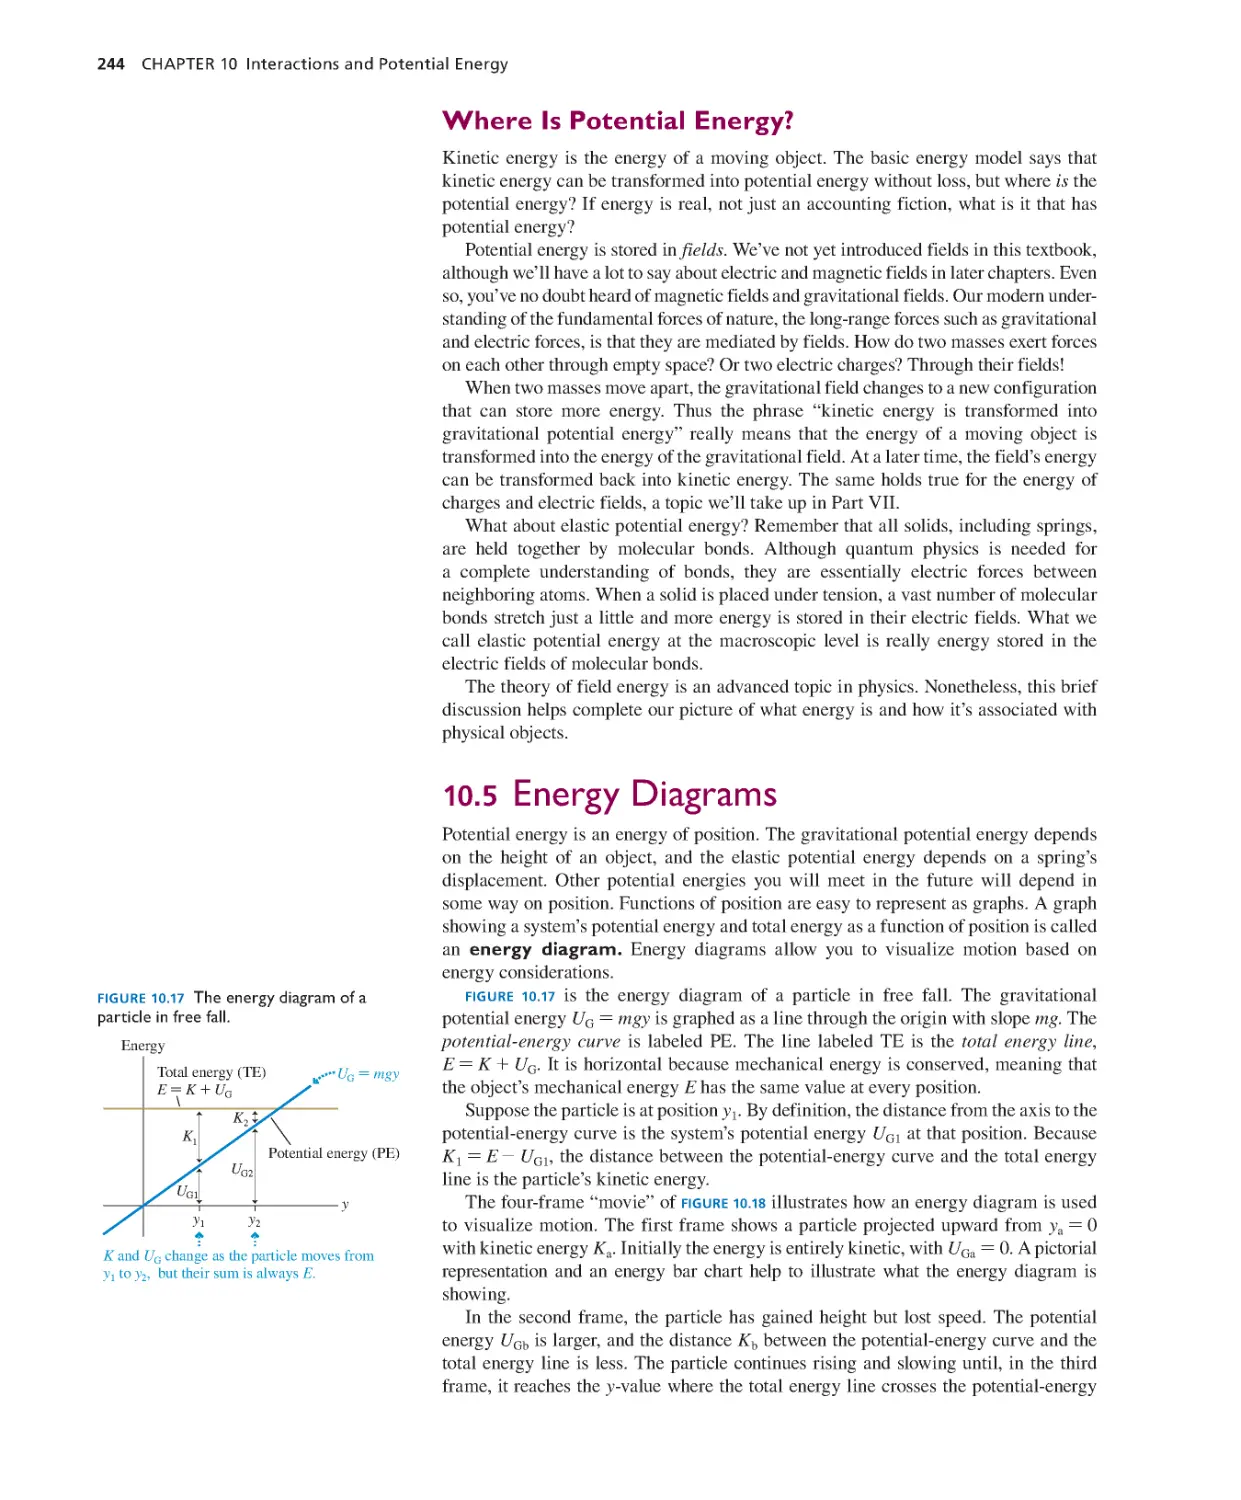 10.5. Energy Diagrams